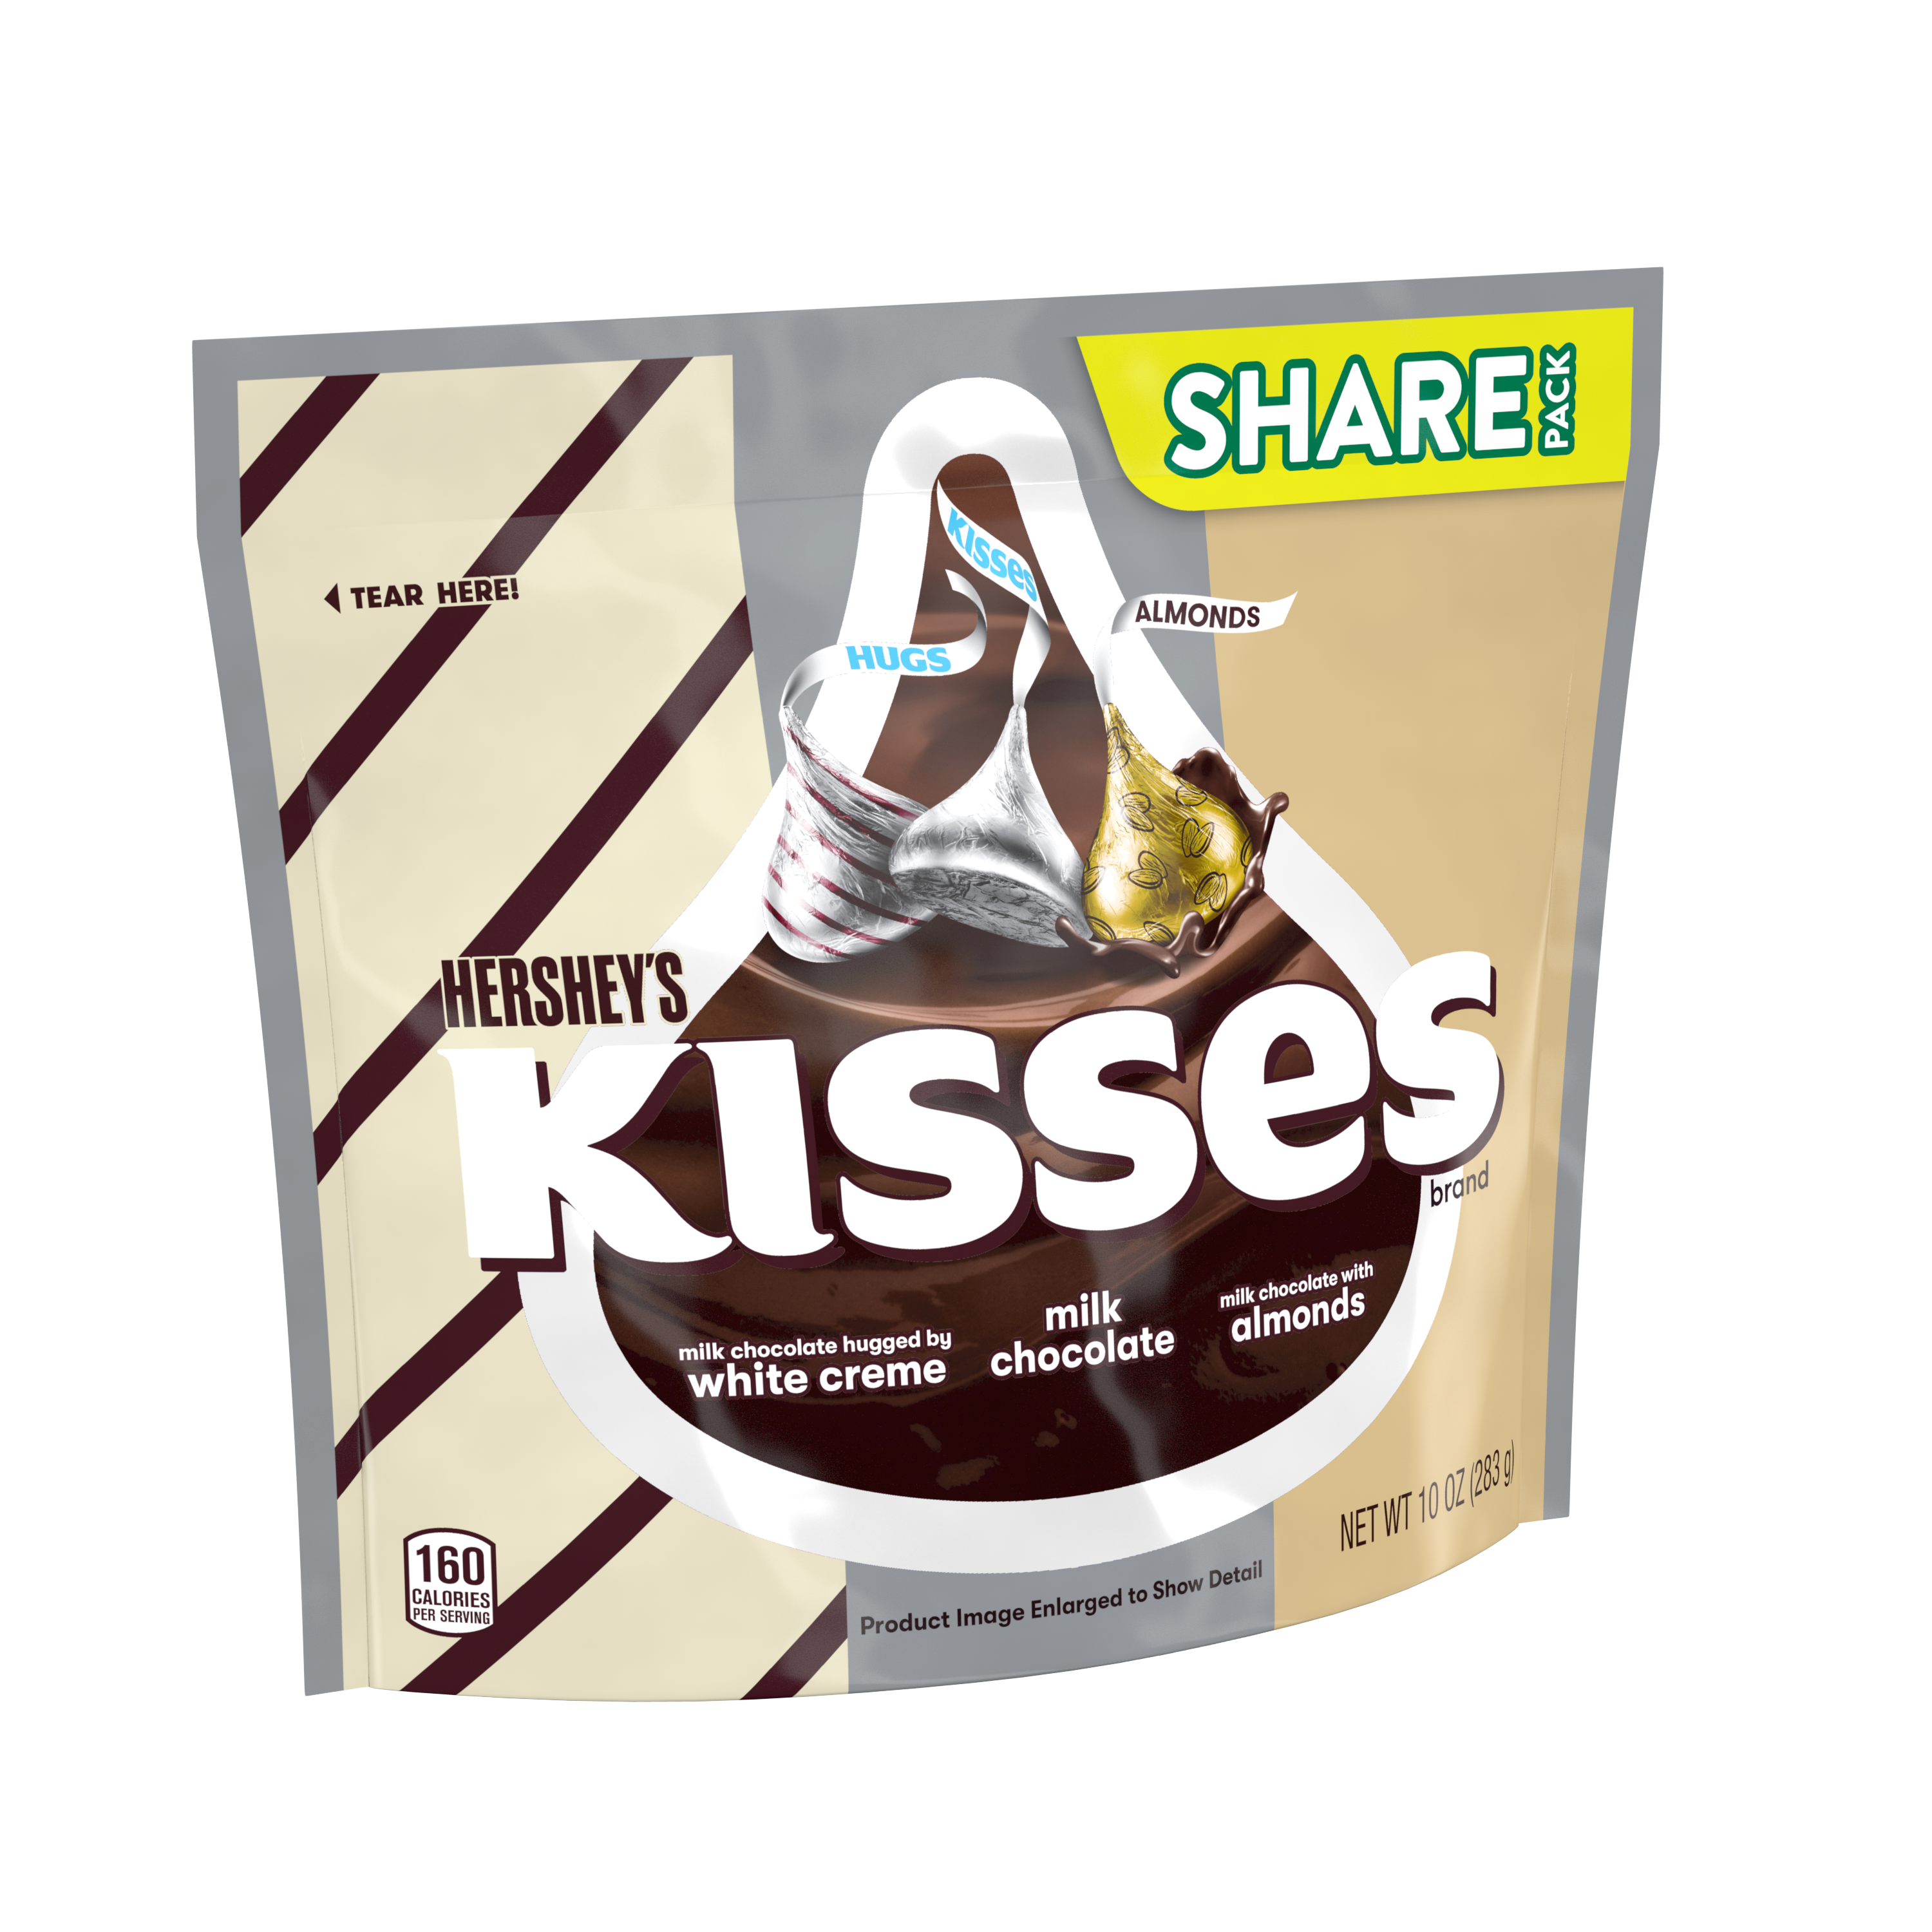 HERSHEY'S KISSES Assortment, 10 oz pack - Left Side of Package